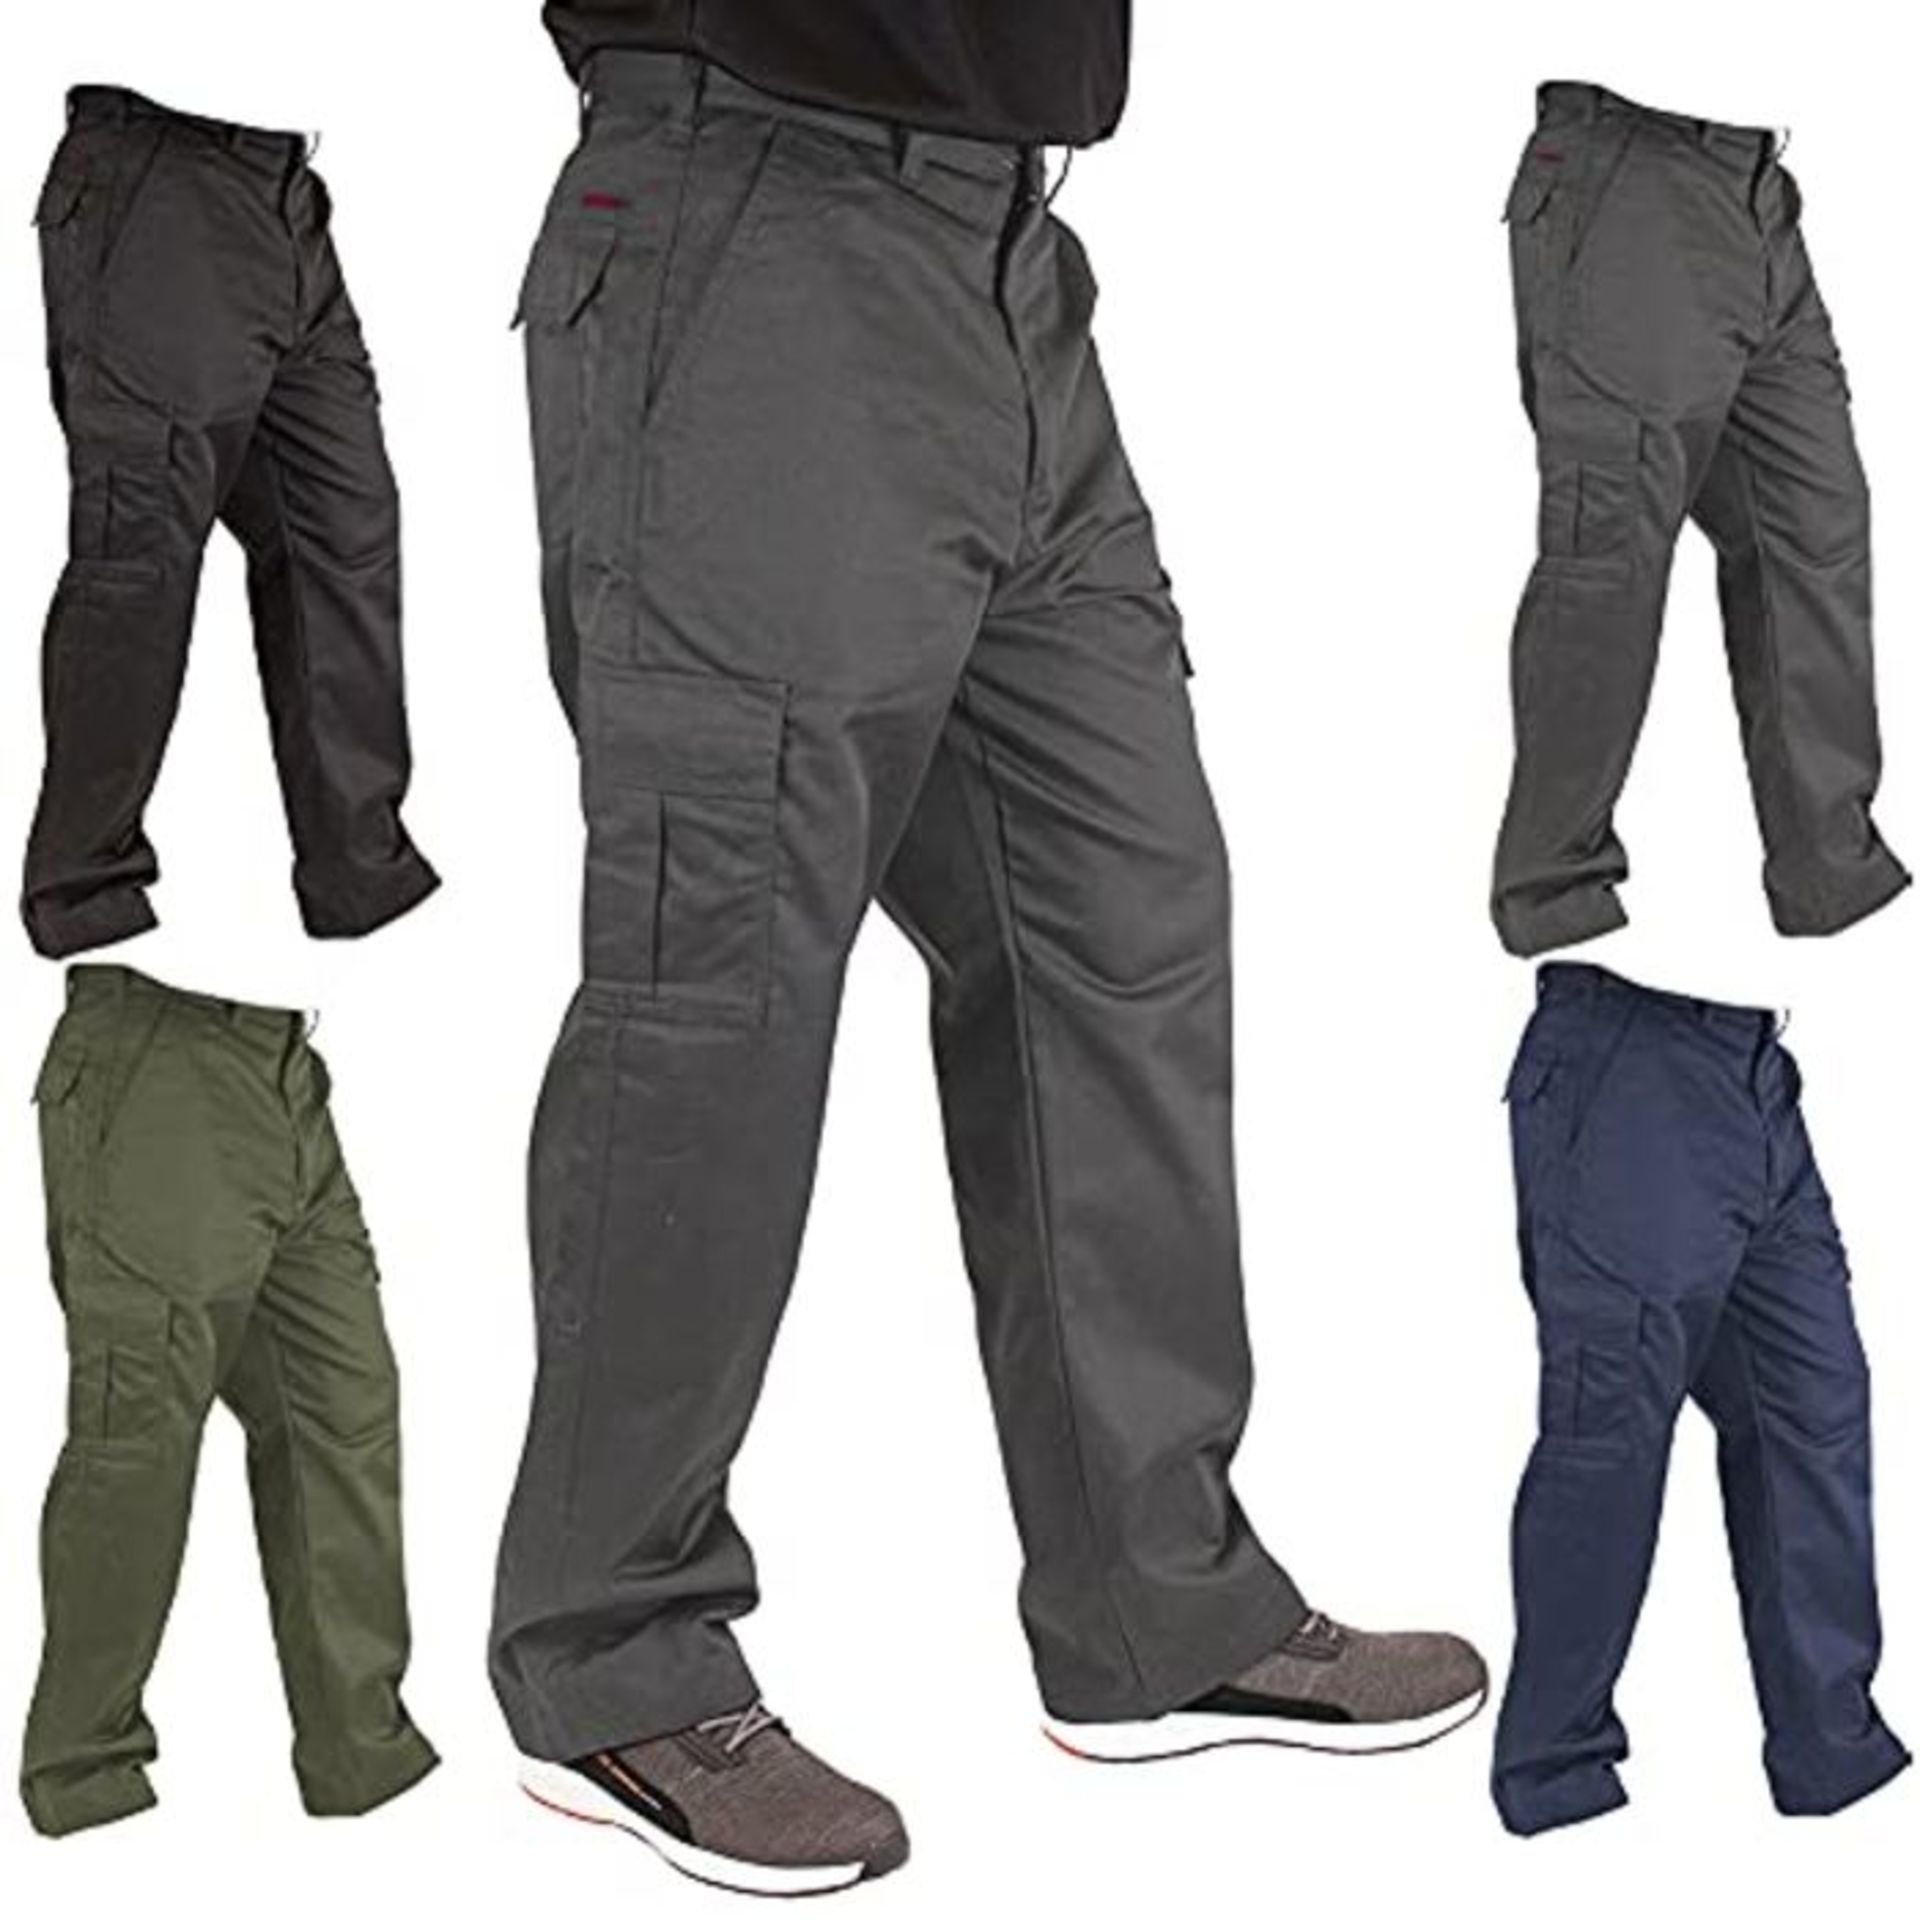 Lee Cooper Mens Classic Workwear Pant Cargo Trouser, Grey, 36W/31L (Regular)